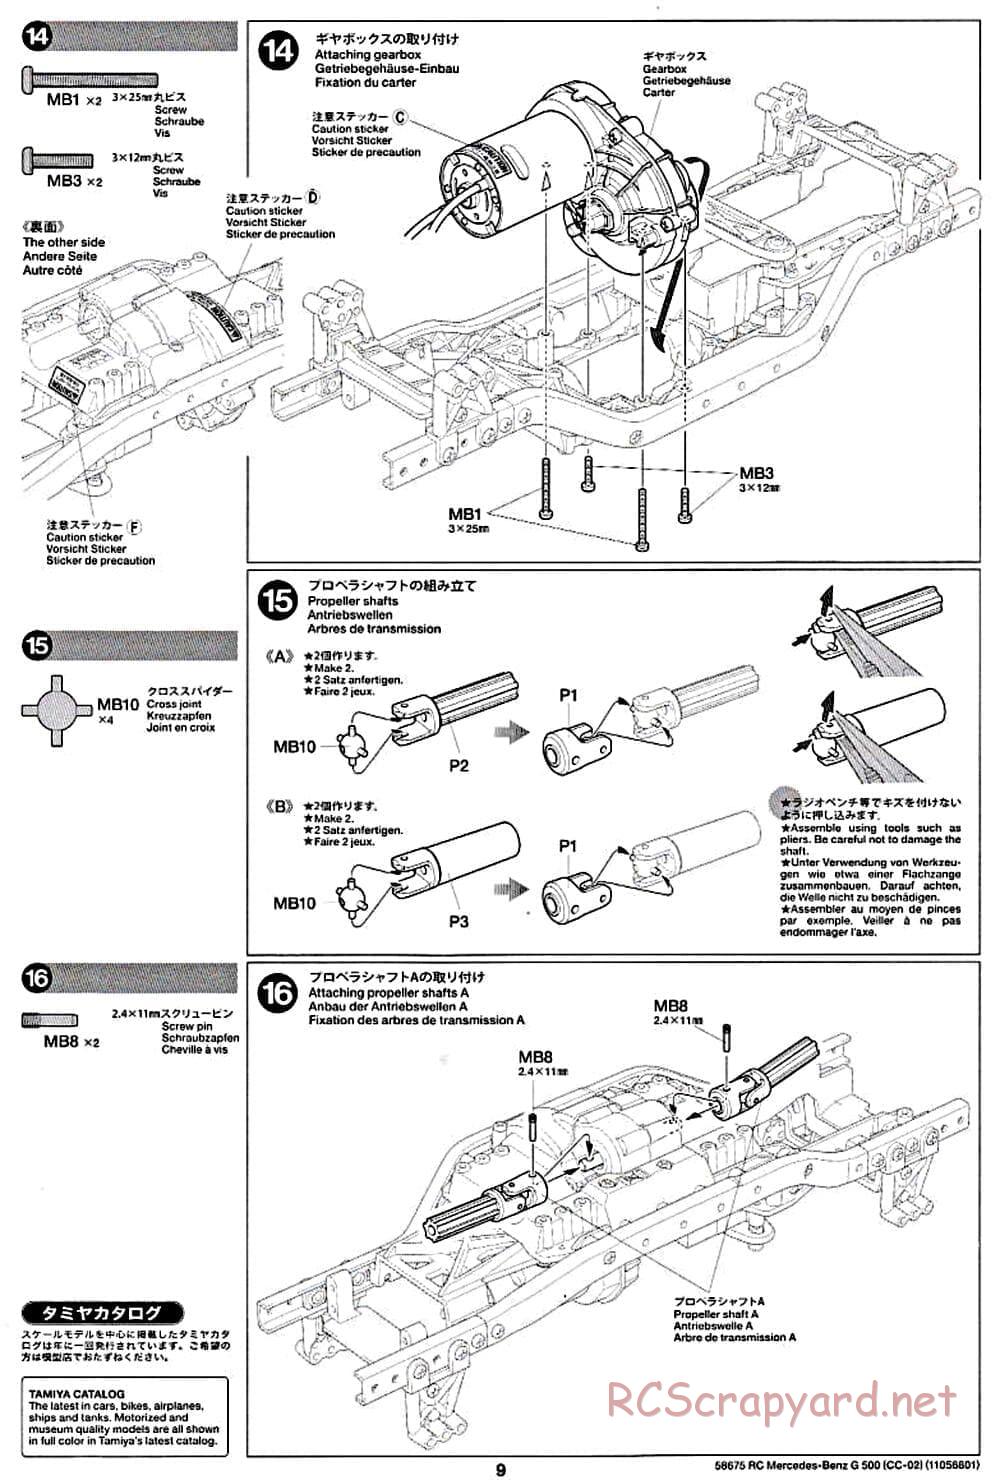 Tamiya - Mercedes-Benz G500 - CC-02 Chassis - Manual - Page 9